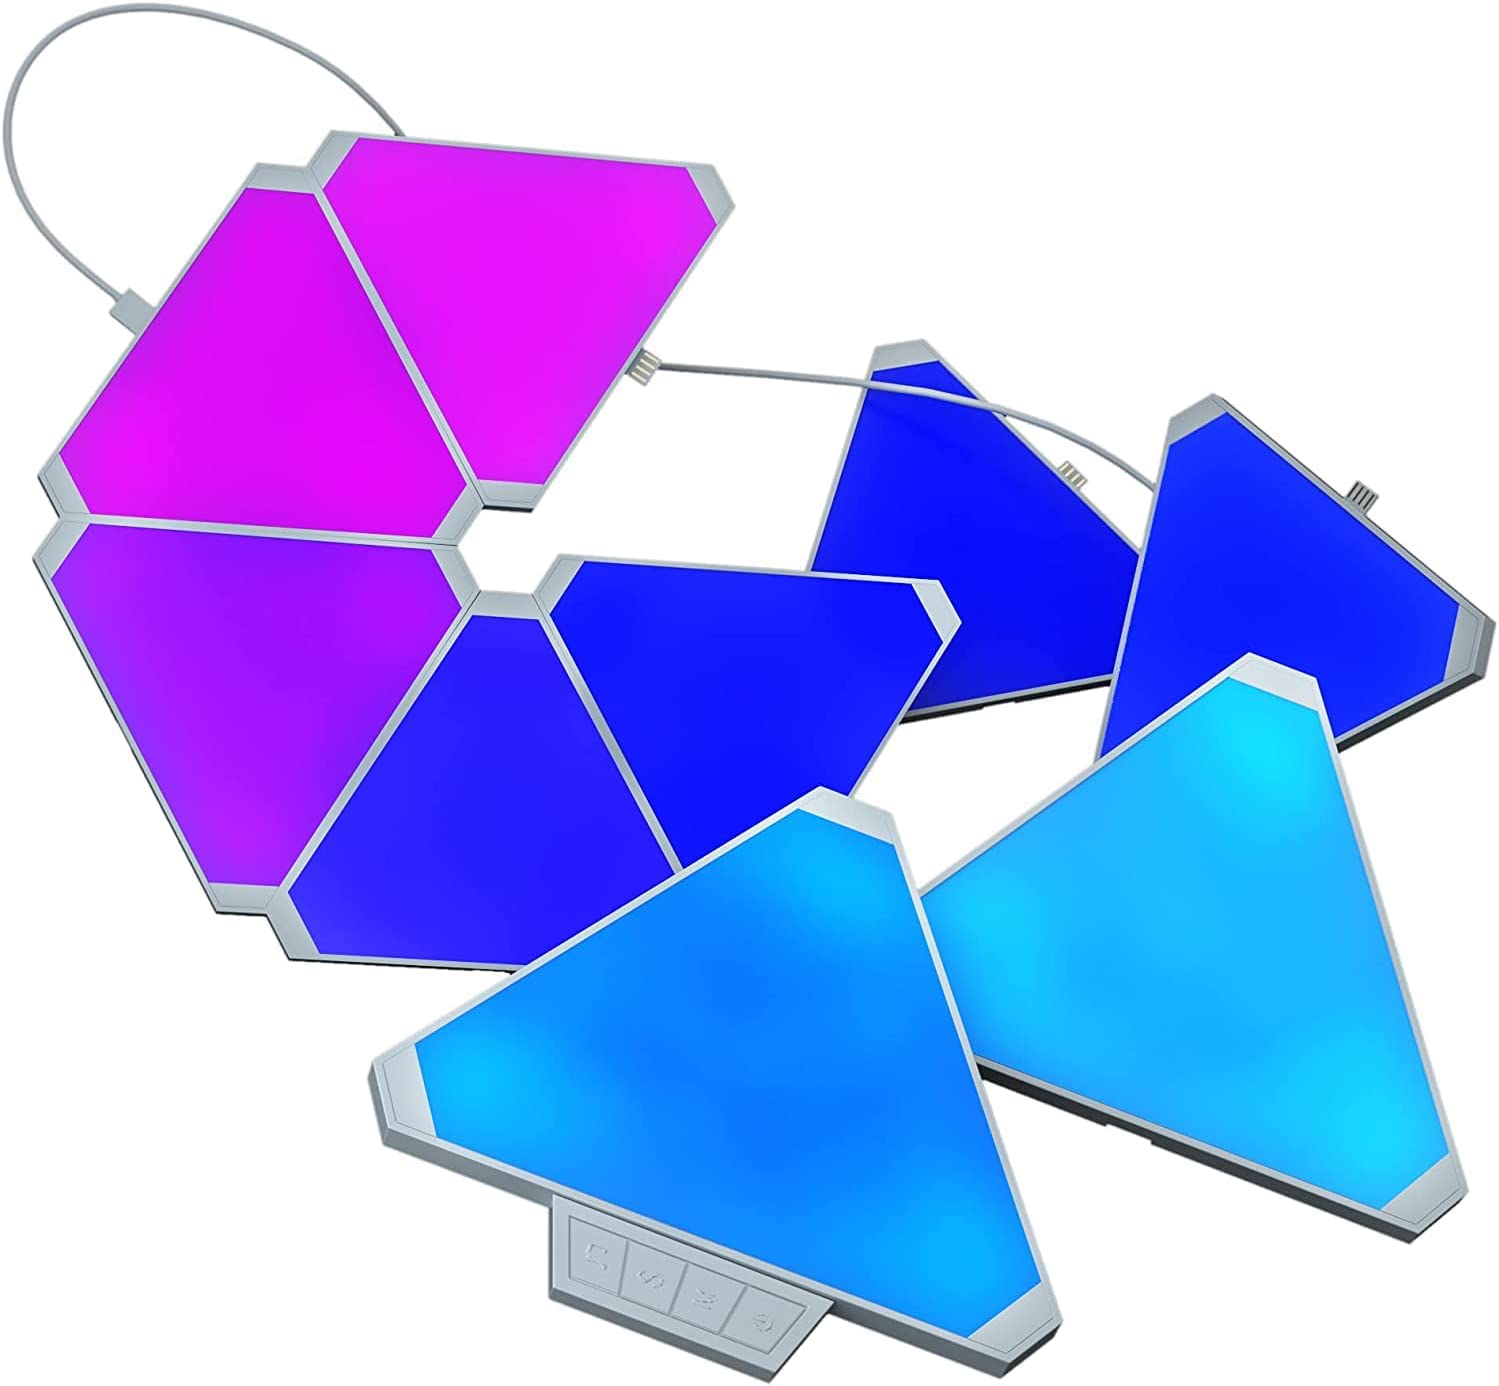 Triangle RGB LED Wall Light Panels - HomeMate